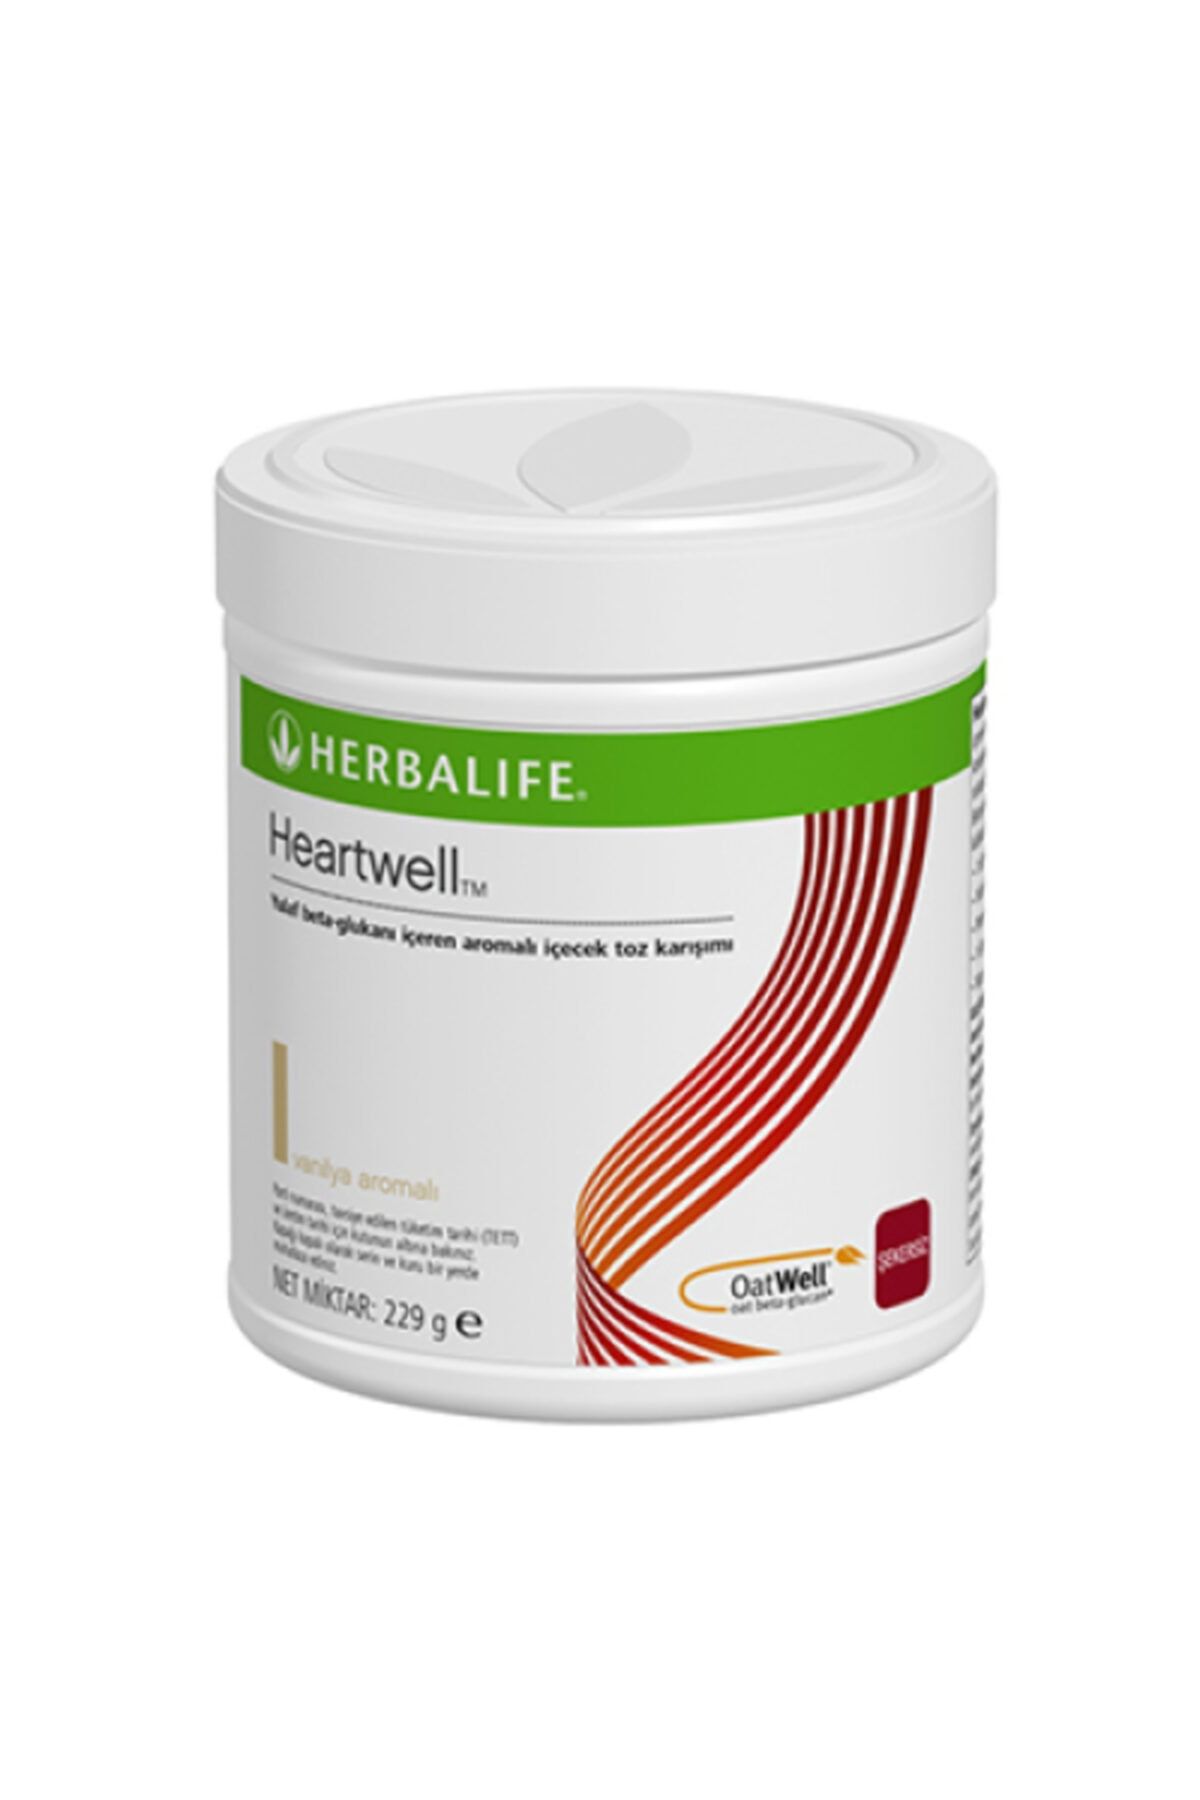 Herbalife Heartwell (vanilya Aromalı )